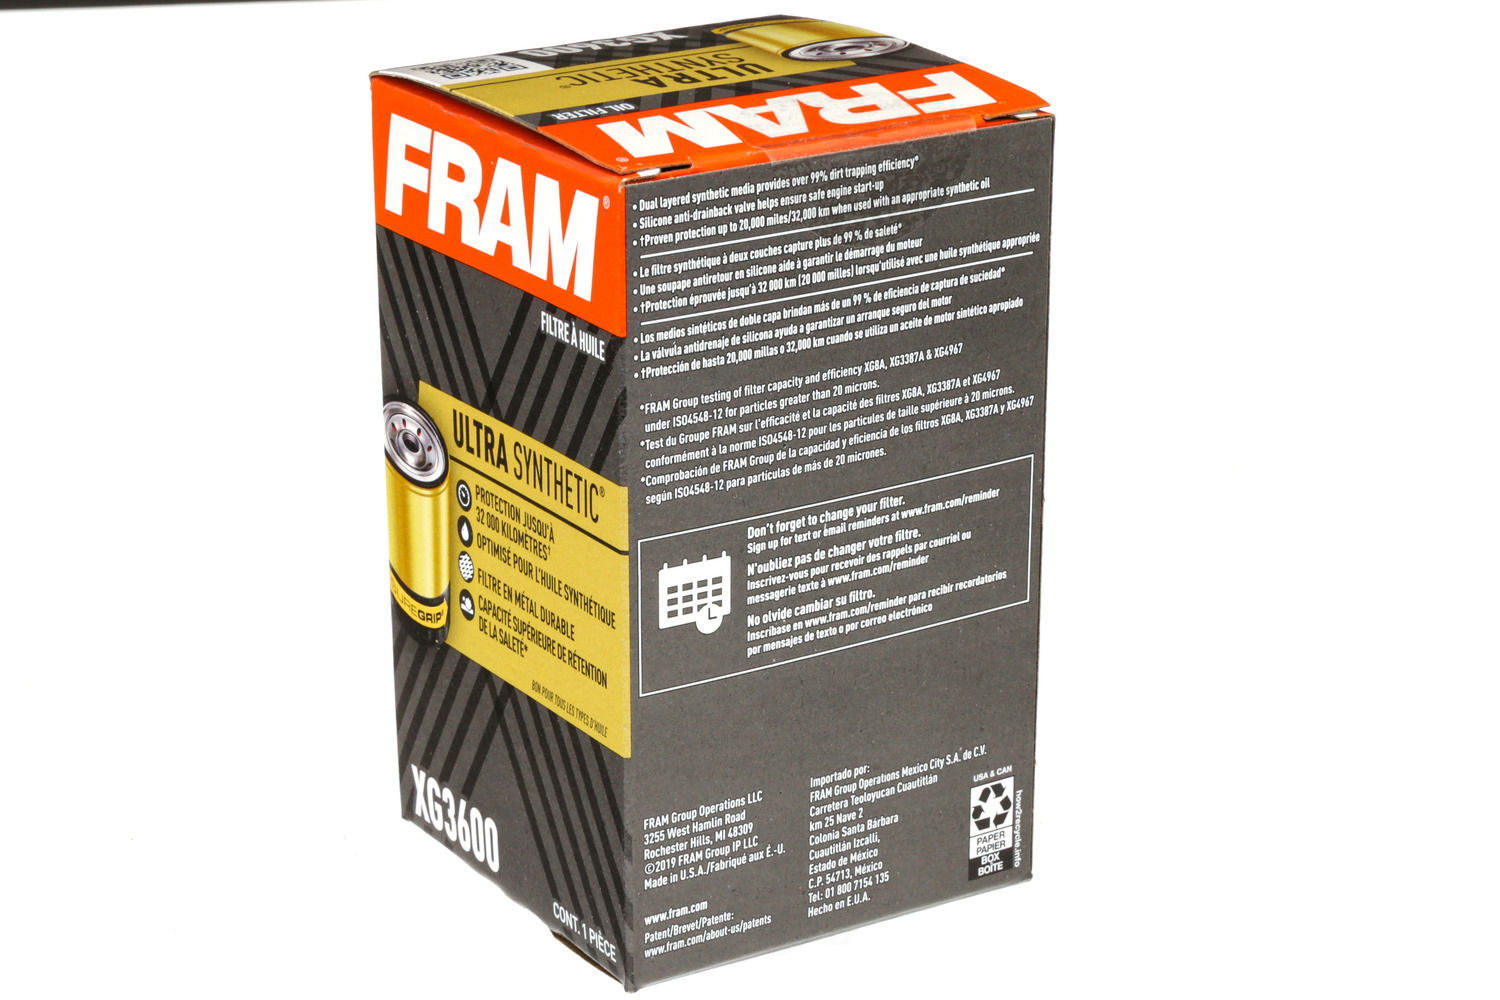 FRAM ULTRA - Ultra Synthetic Engine Oil Filter - FP4 XG3600